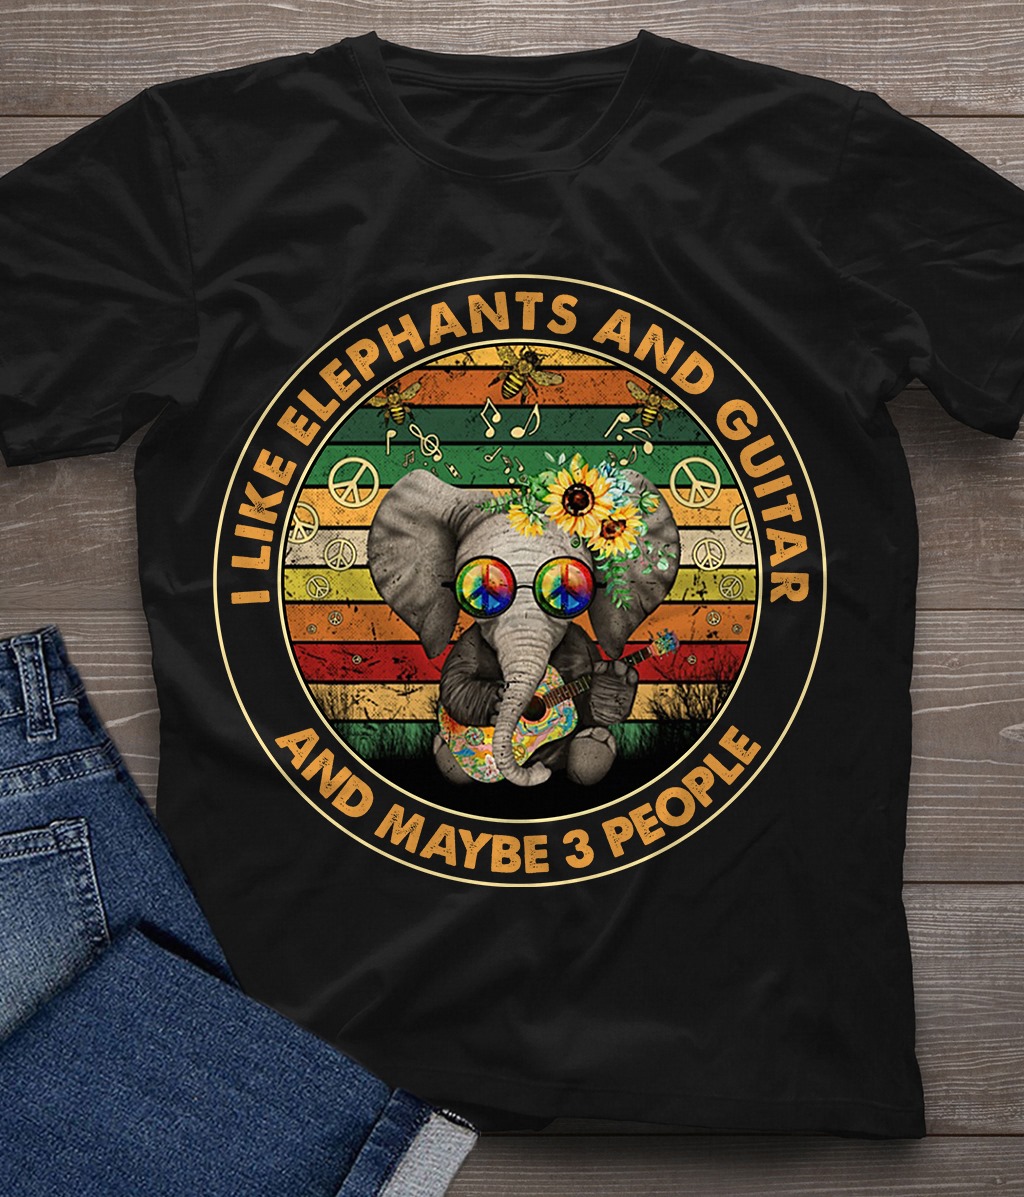 I like elephants and guitar and maybe 3 people - Elephant playing guitar